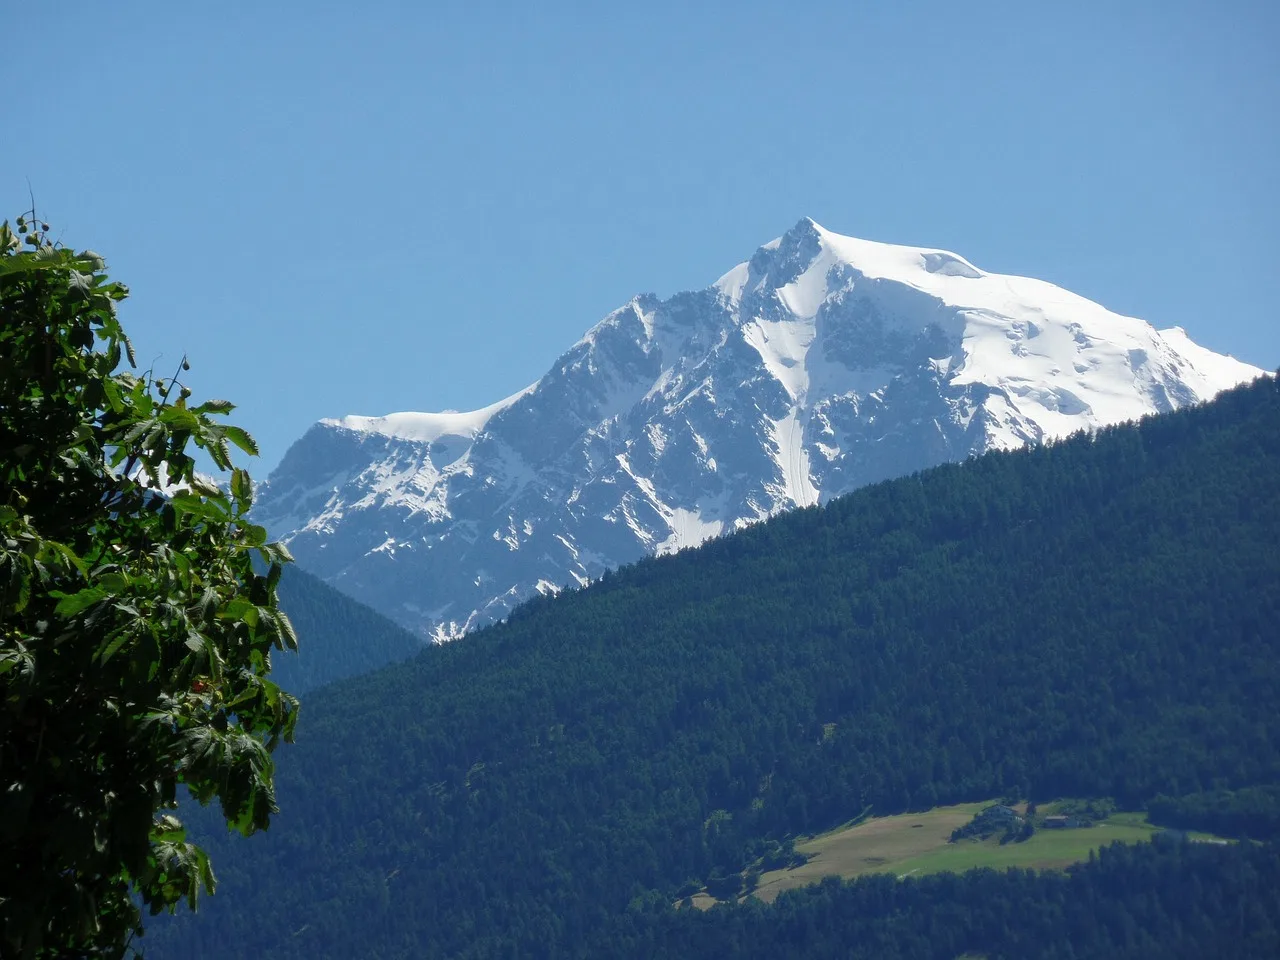 Day 5 - Bolzano–Glorenza–St. Moritz, Switzerland